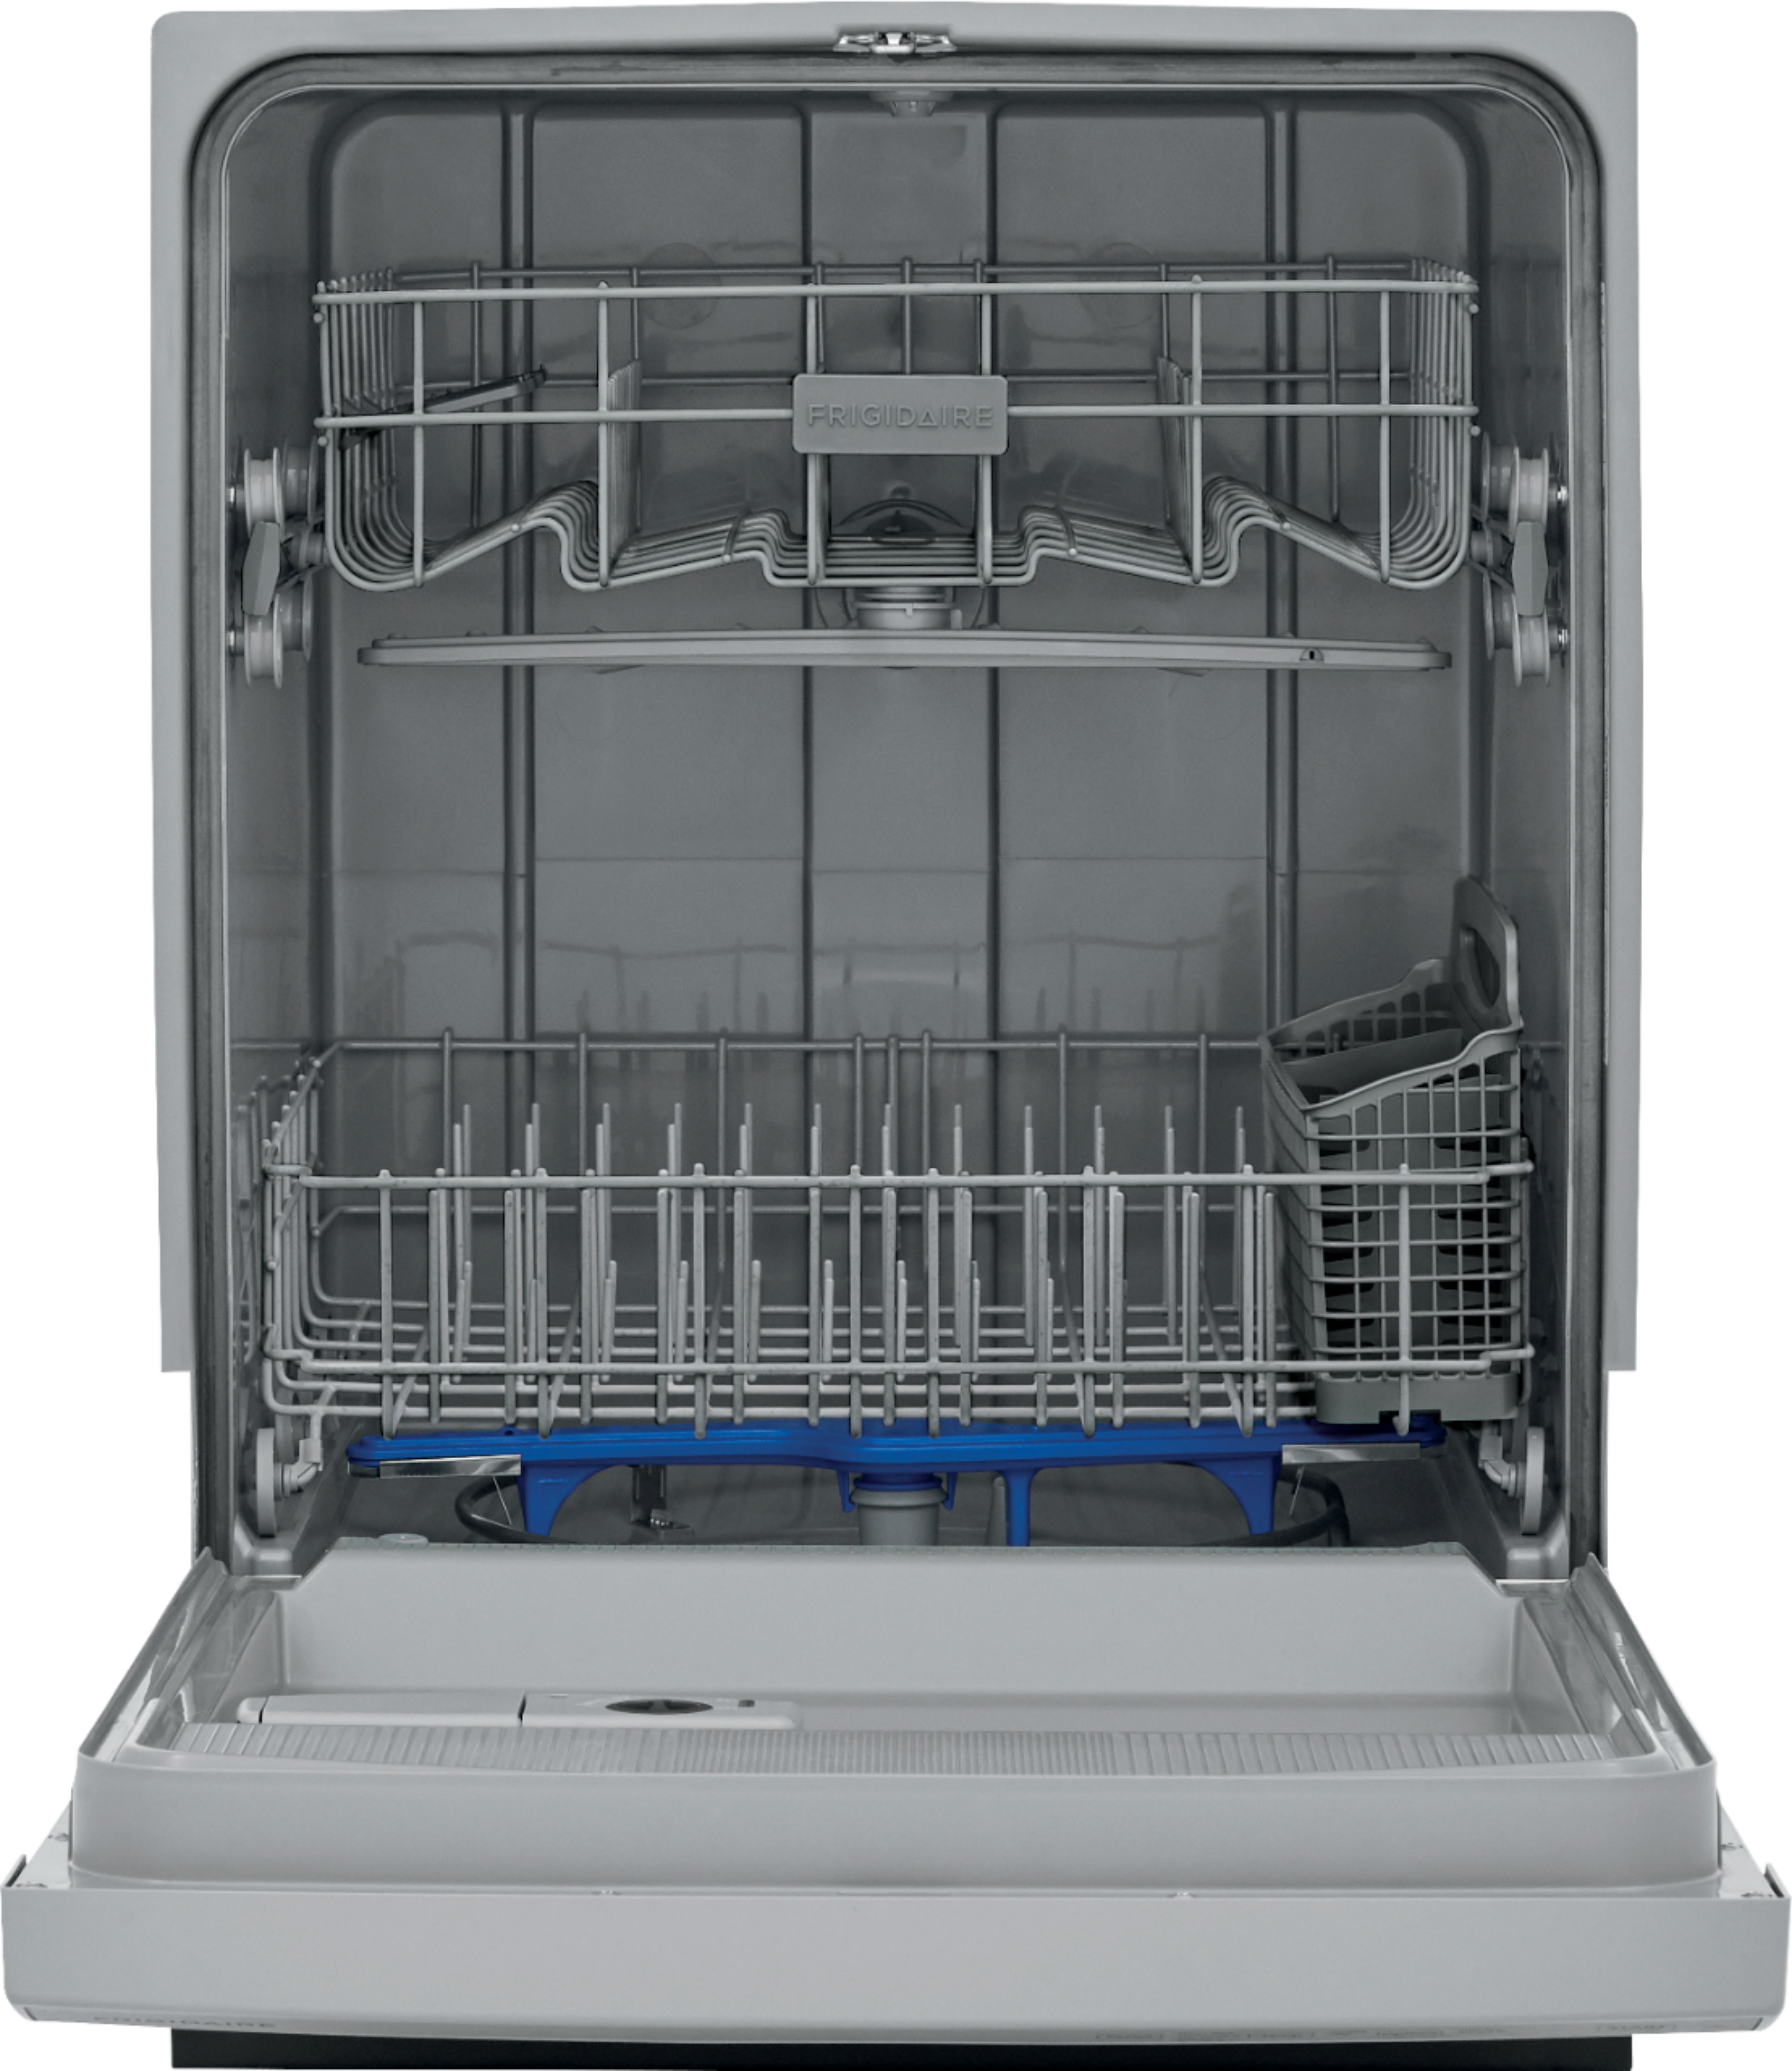 frigidaire dishwasher ffcd2418us reviews